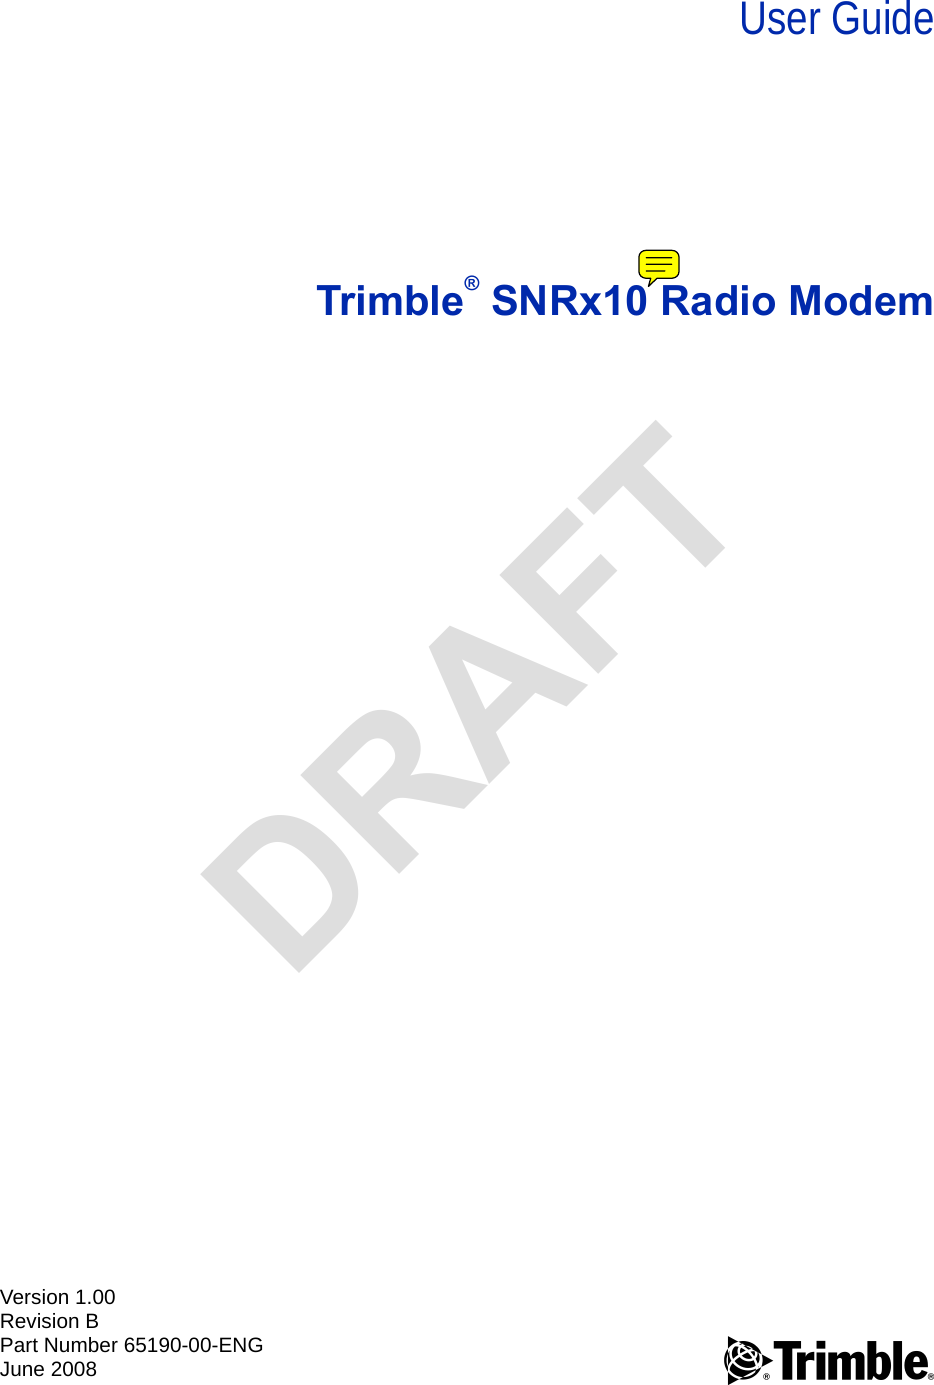 Version 1.00Revision BPart Number 65190-00-ENGJune 2008 FUser GuideTrimble® SNRx10 Radio ModemDRAFT